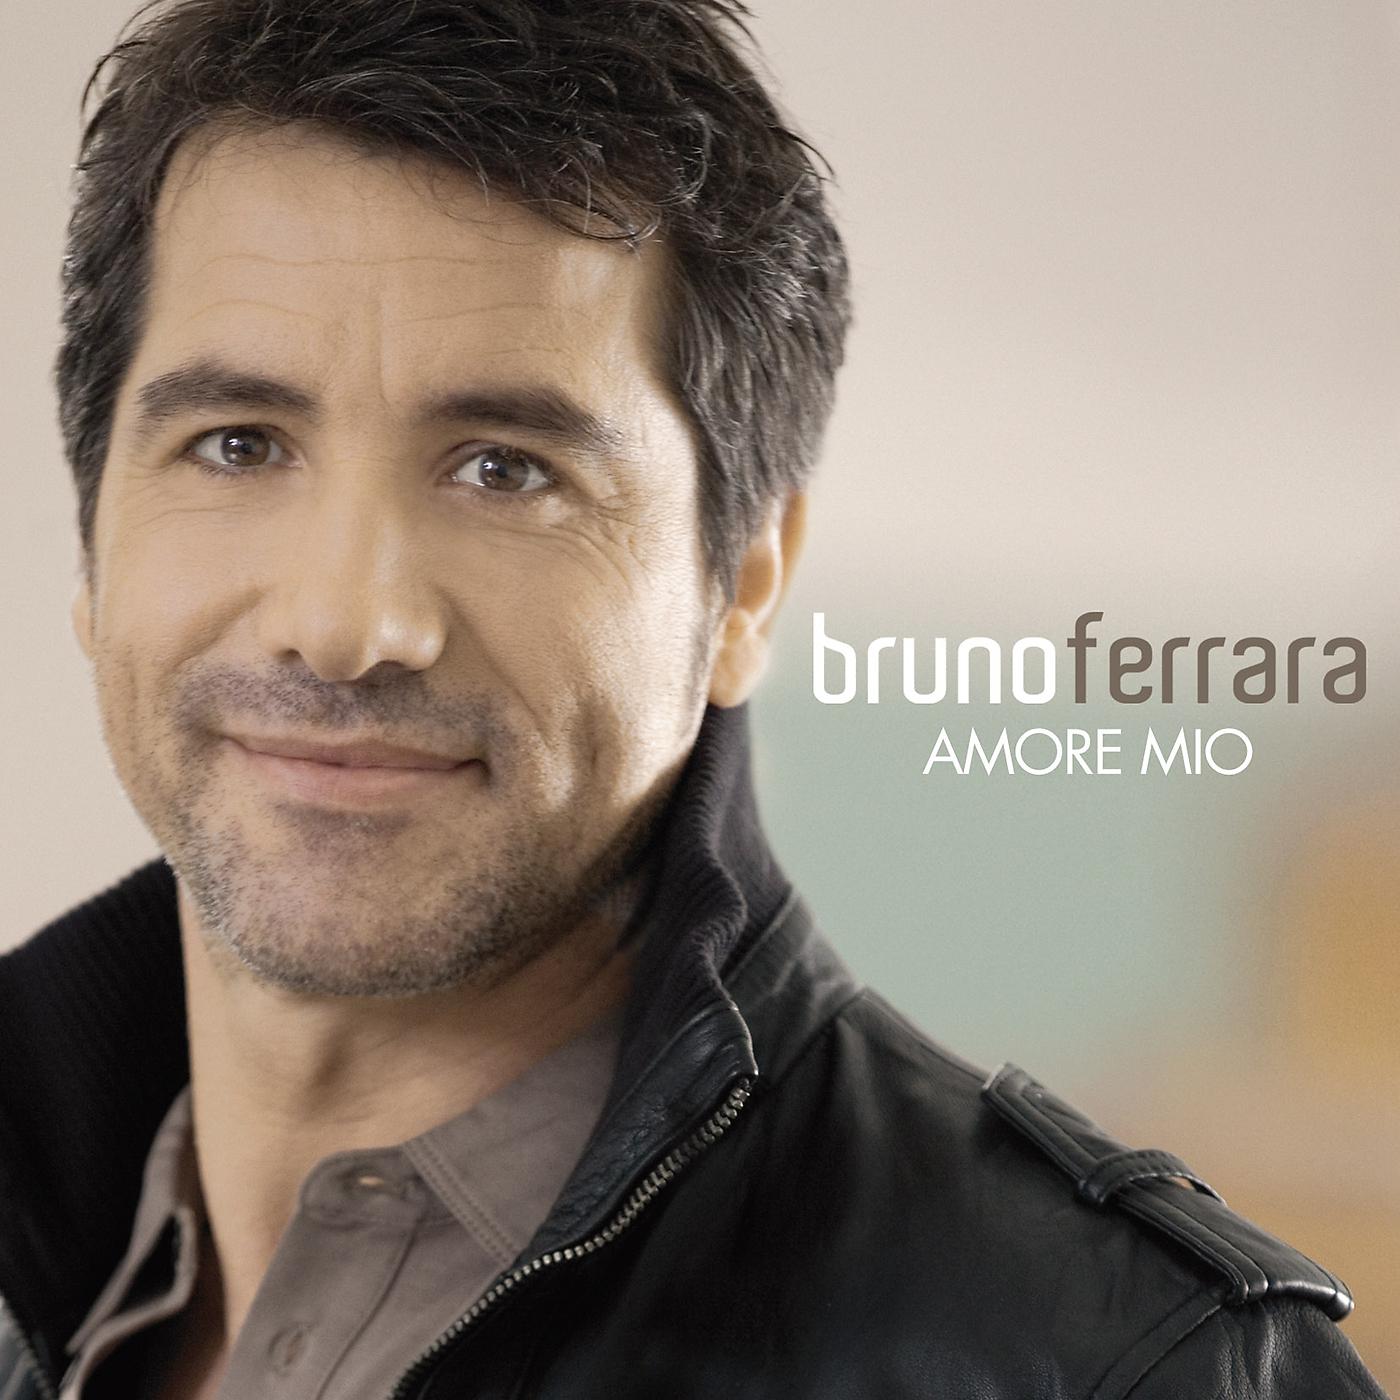 Amore mio mp3. Bruno Ferrari певец. А море миоброноферара песня.